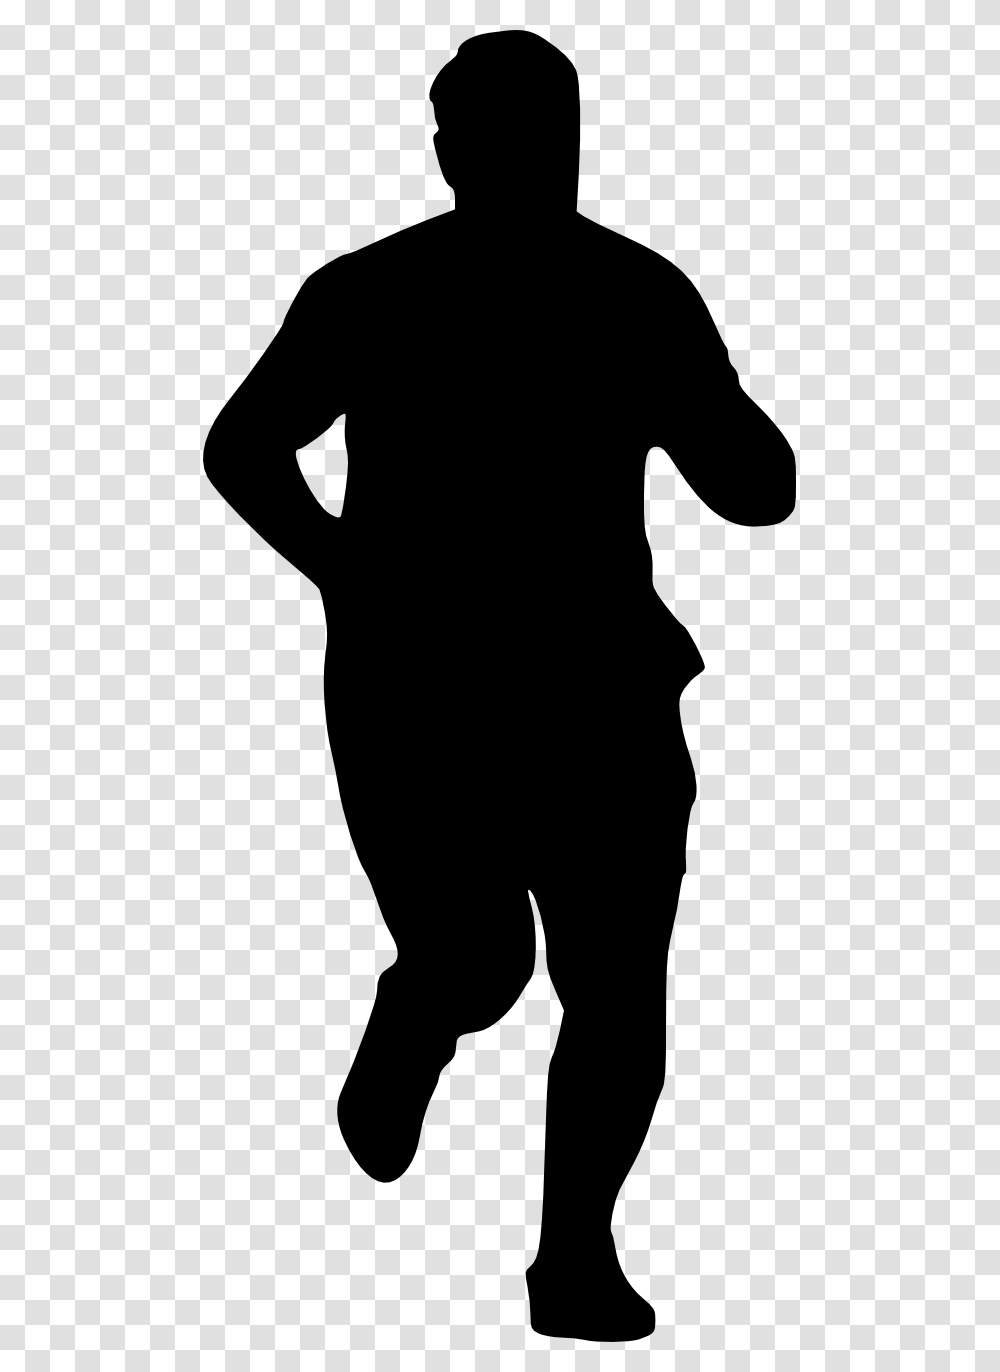 Free Man Running Silhouette Back People Walking Silhouette, Person, Human, Standing, Kneeling Transparent Png